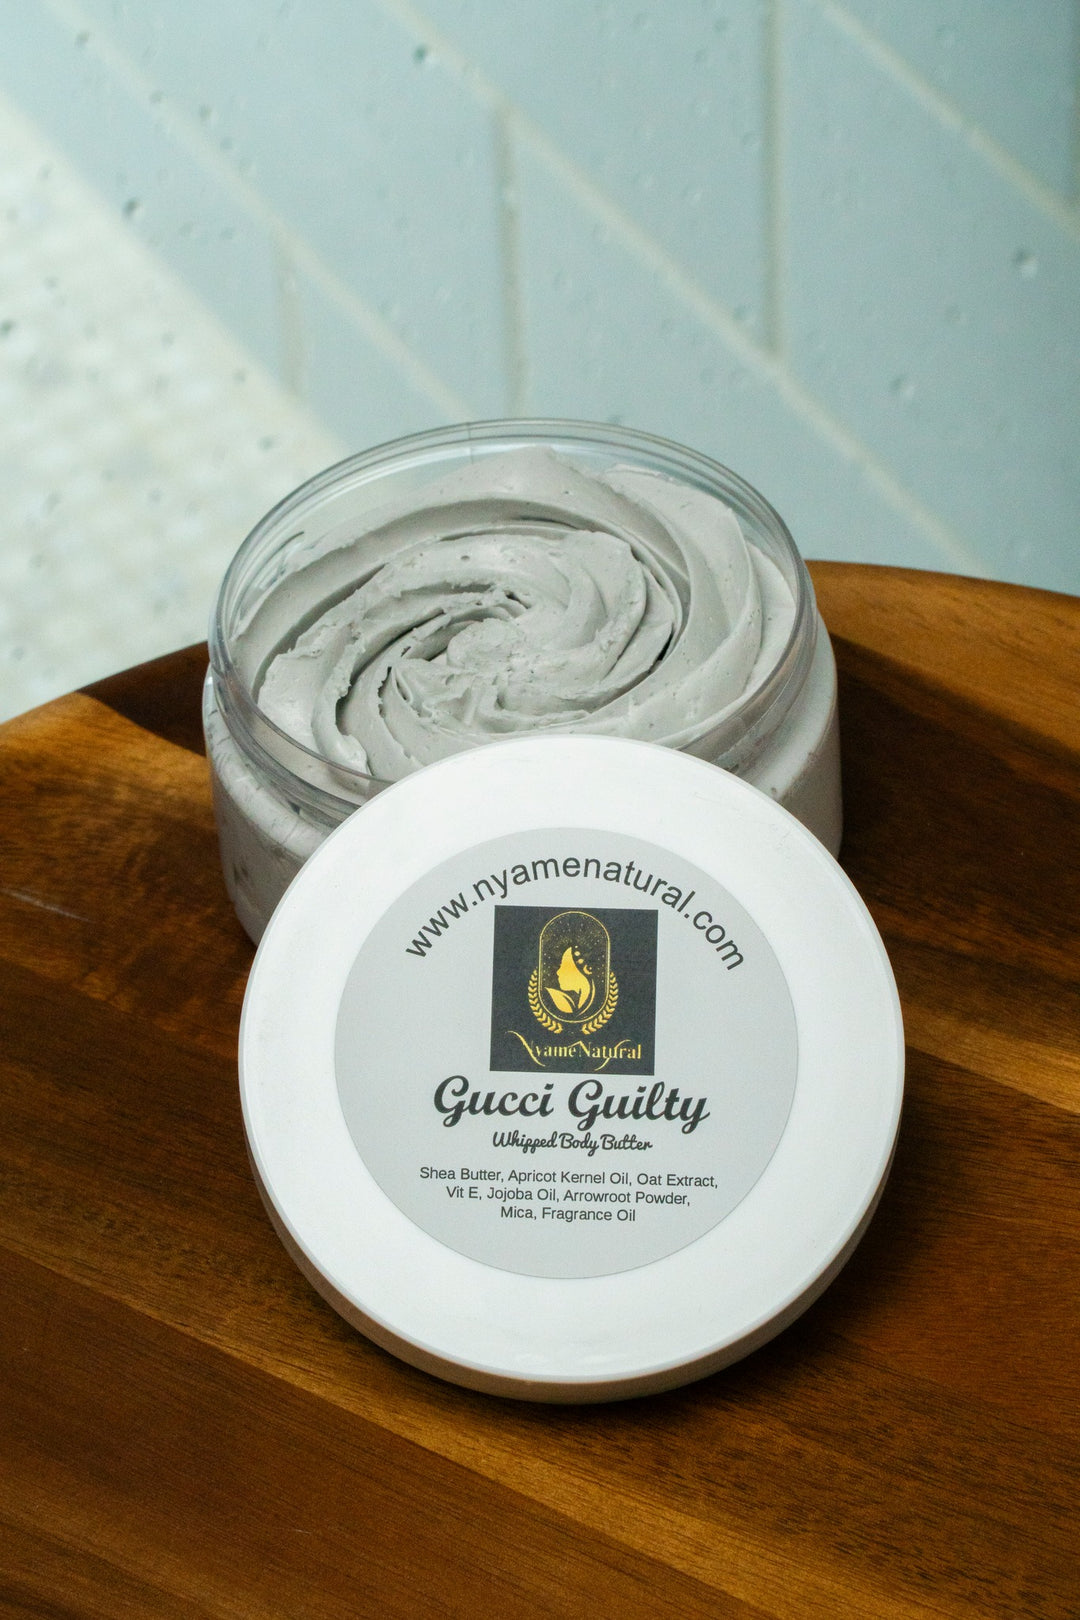 Gucci Guilty Body Butter